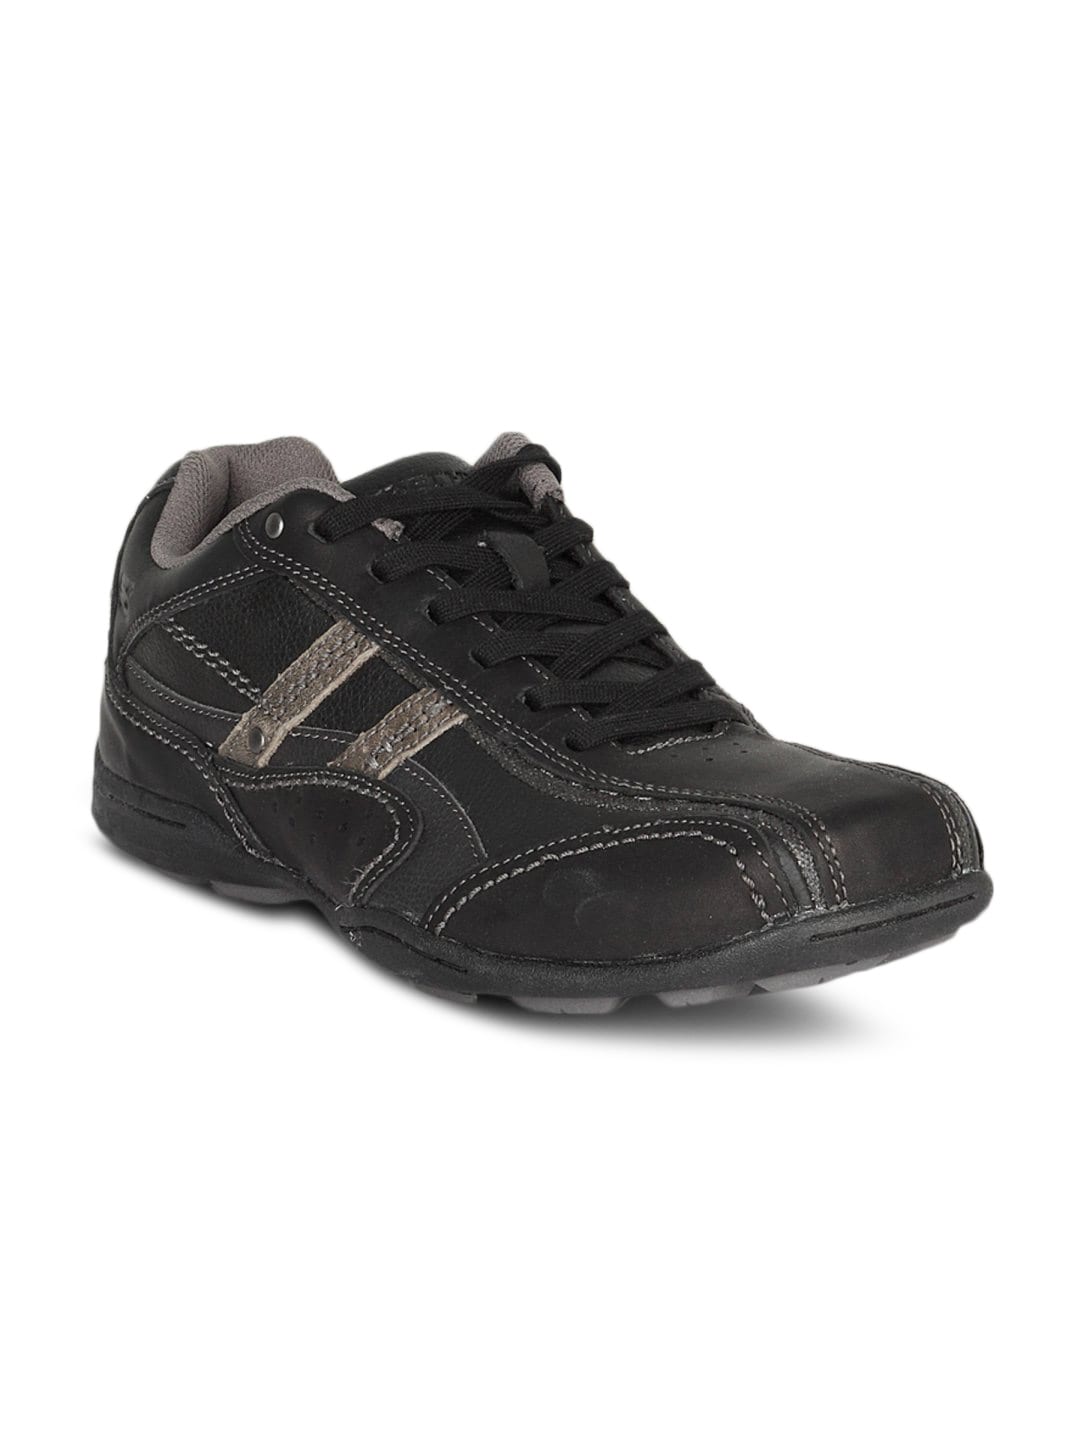 Skechers Men's Striking Black Shoe